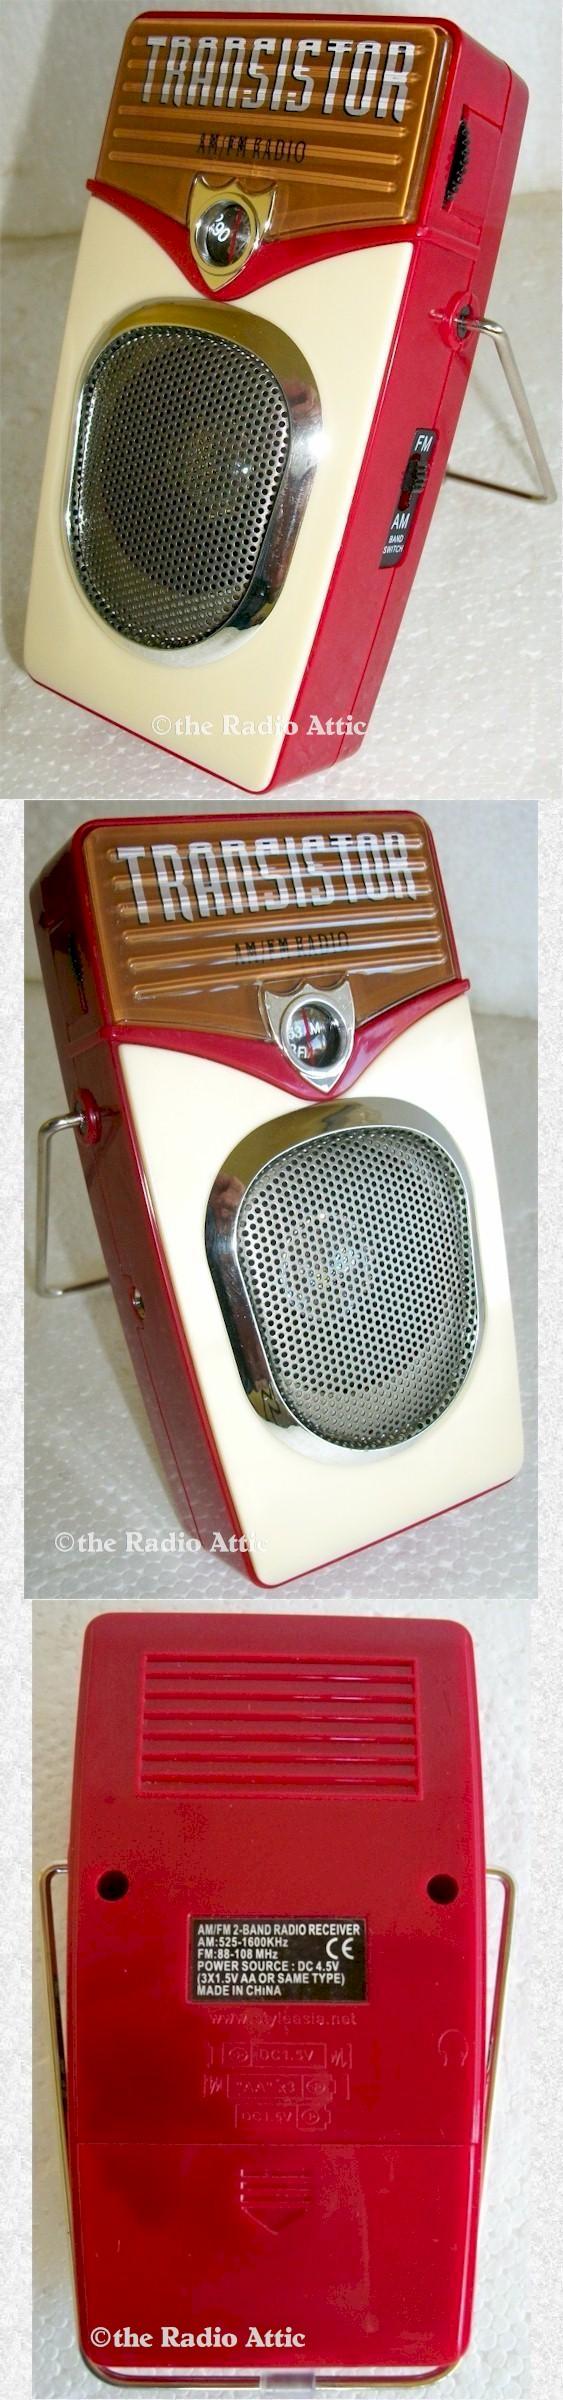 Groovy 1960s Style Transistor Radio